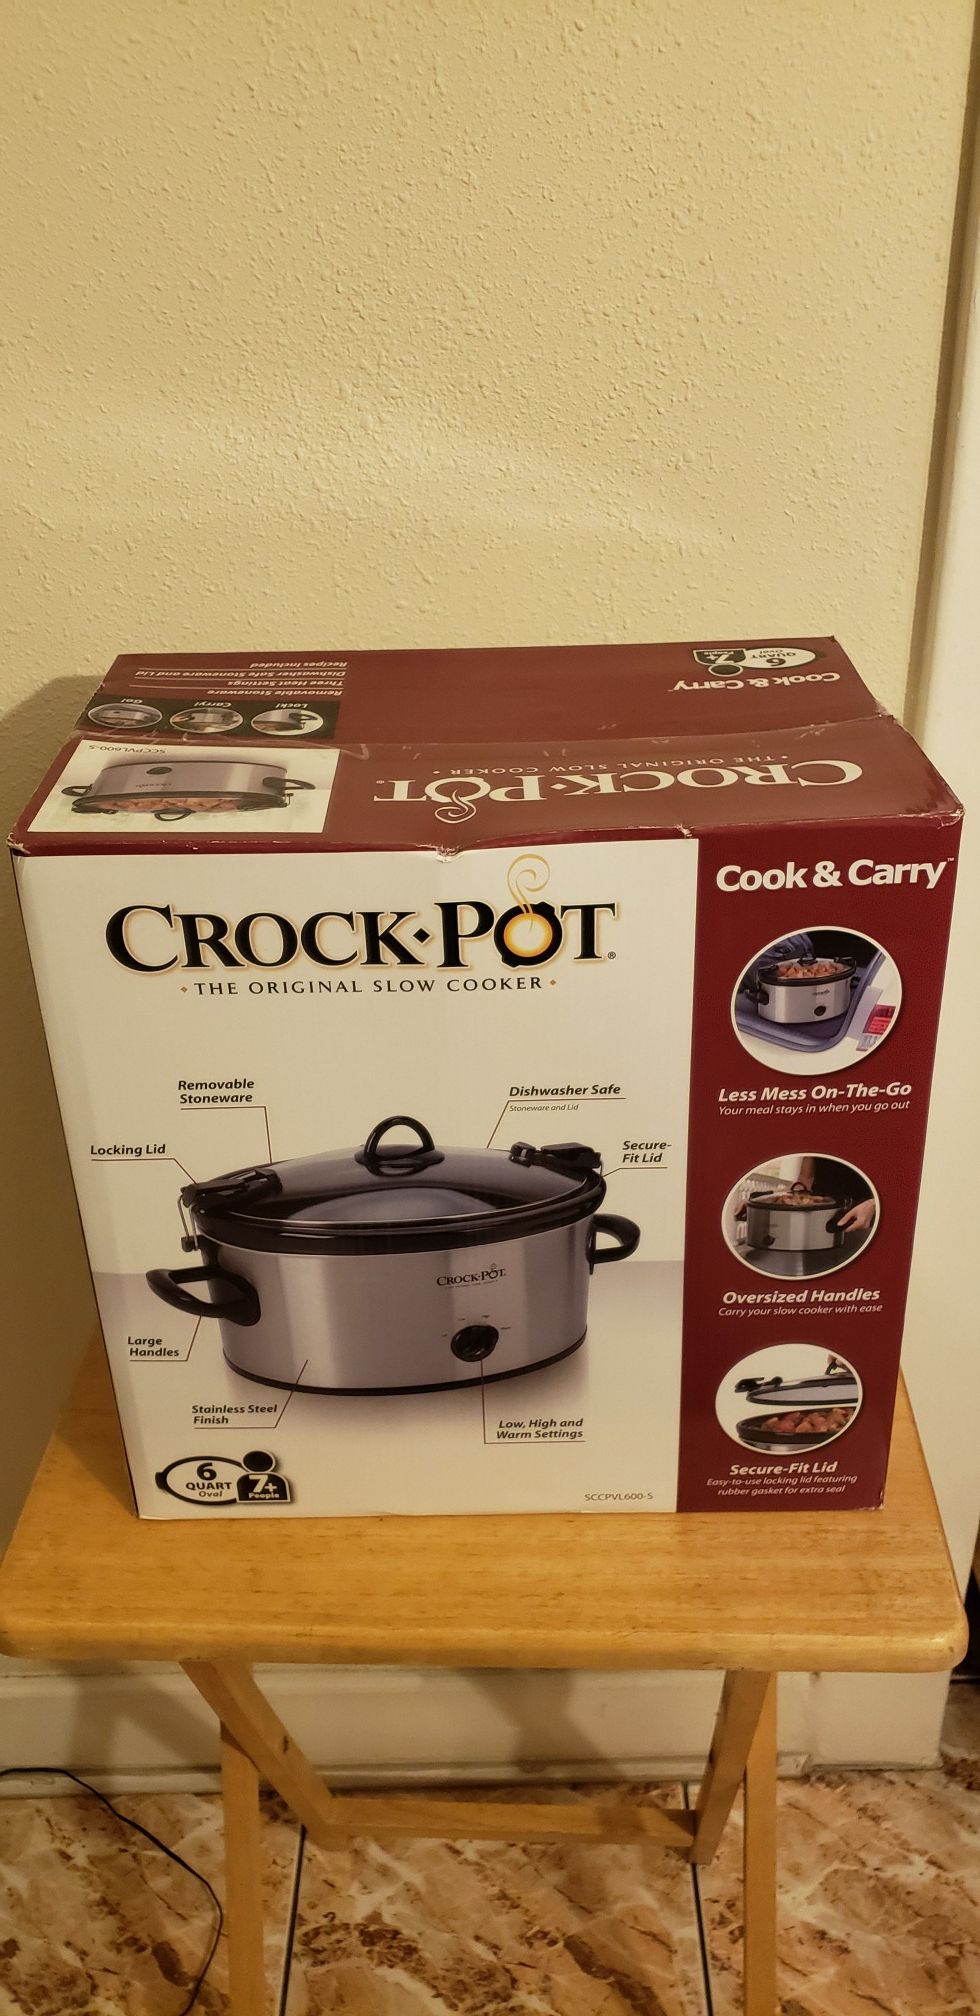 Crock Pot The Original Slow Cooker - Brand New in Original Sealed Box